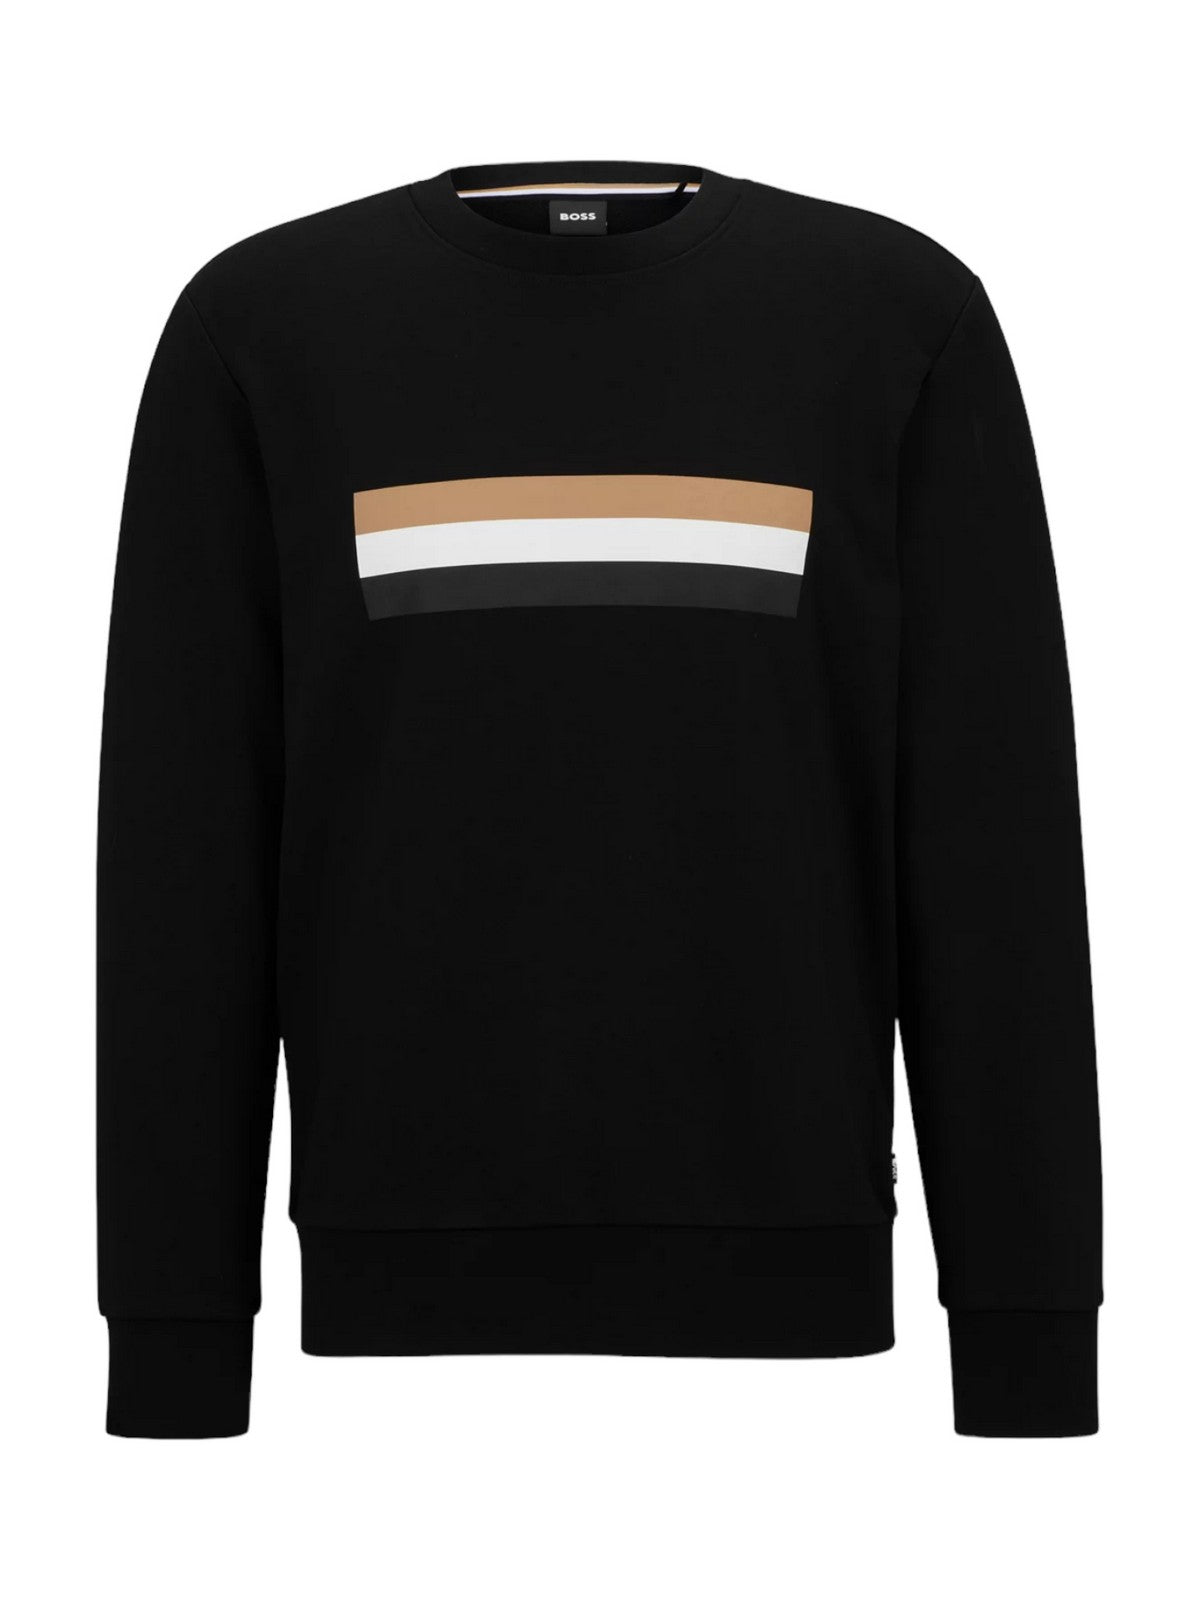 HUGO BOSS Hommes Sweatshirt 50501498 001 Noir